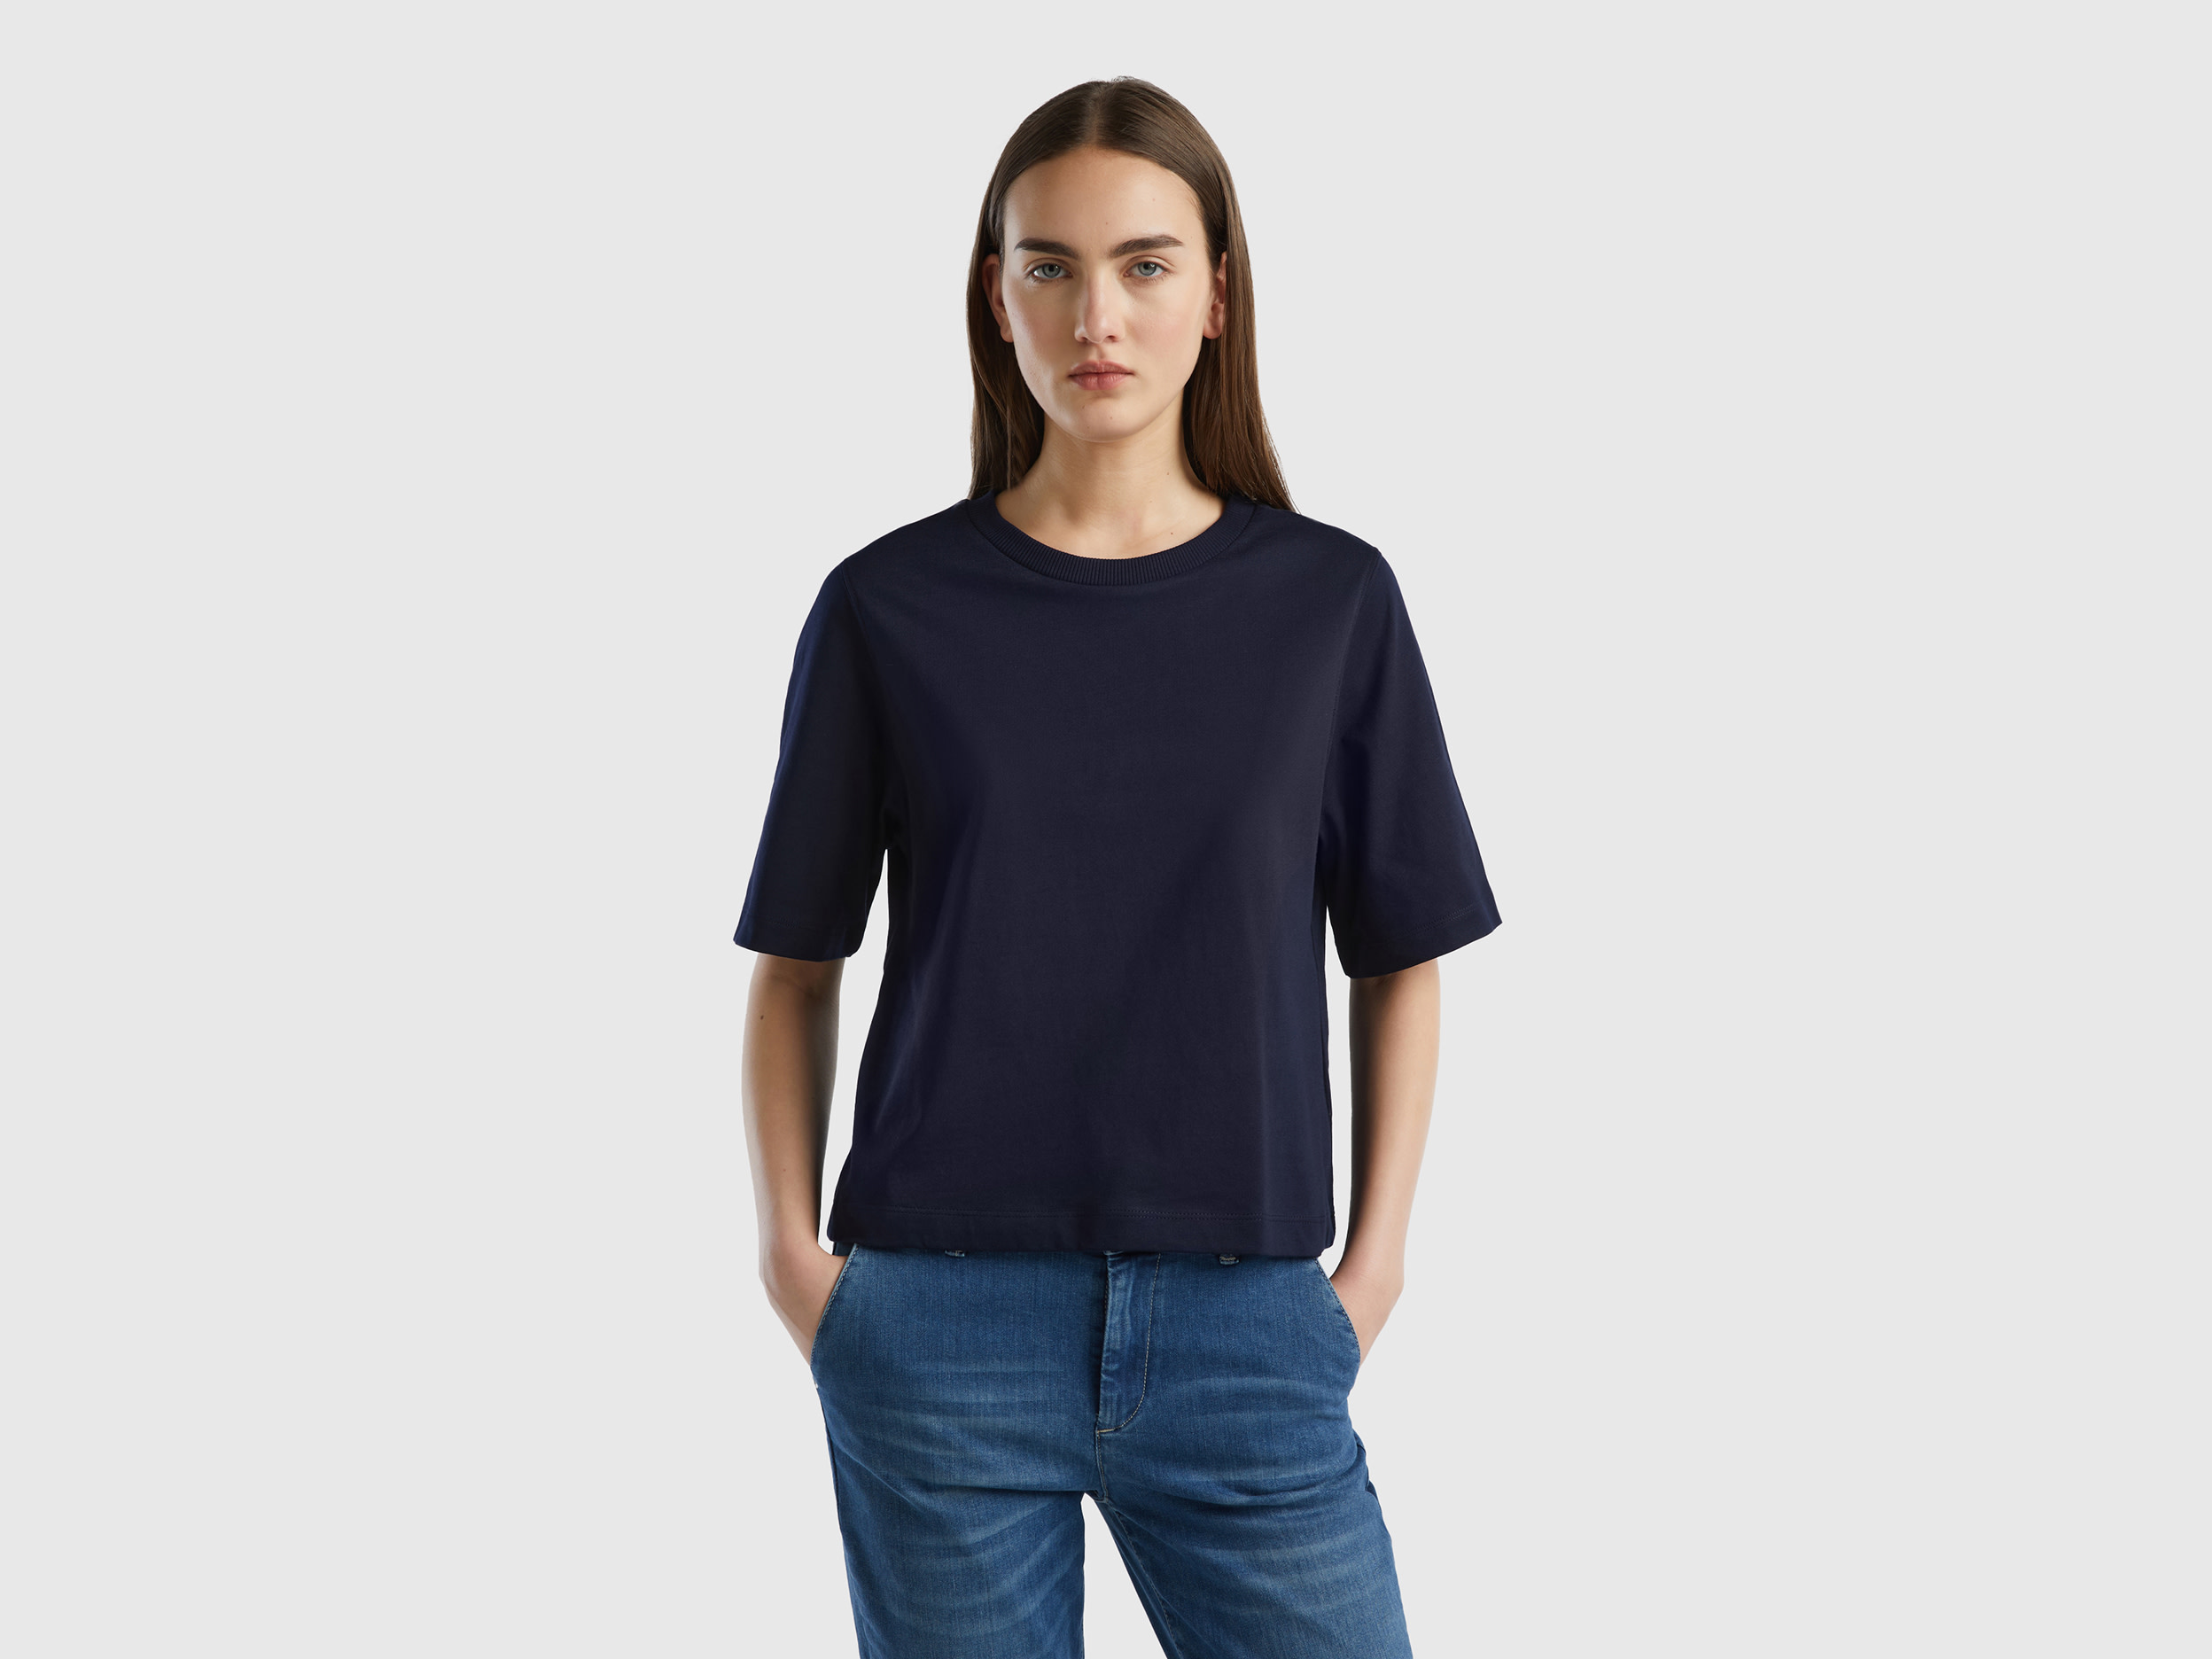 Benetton, 100% Cotton Boxy Fit T-shirt, size XXS, Dark Blue, Women